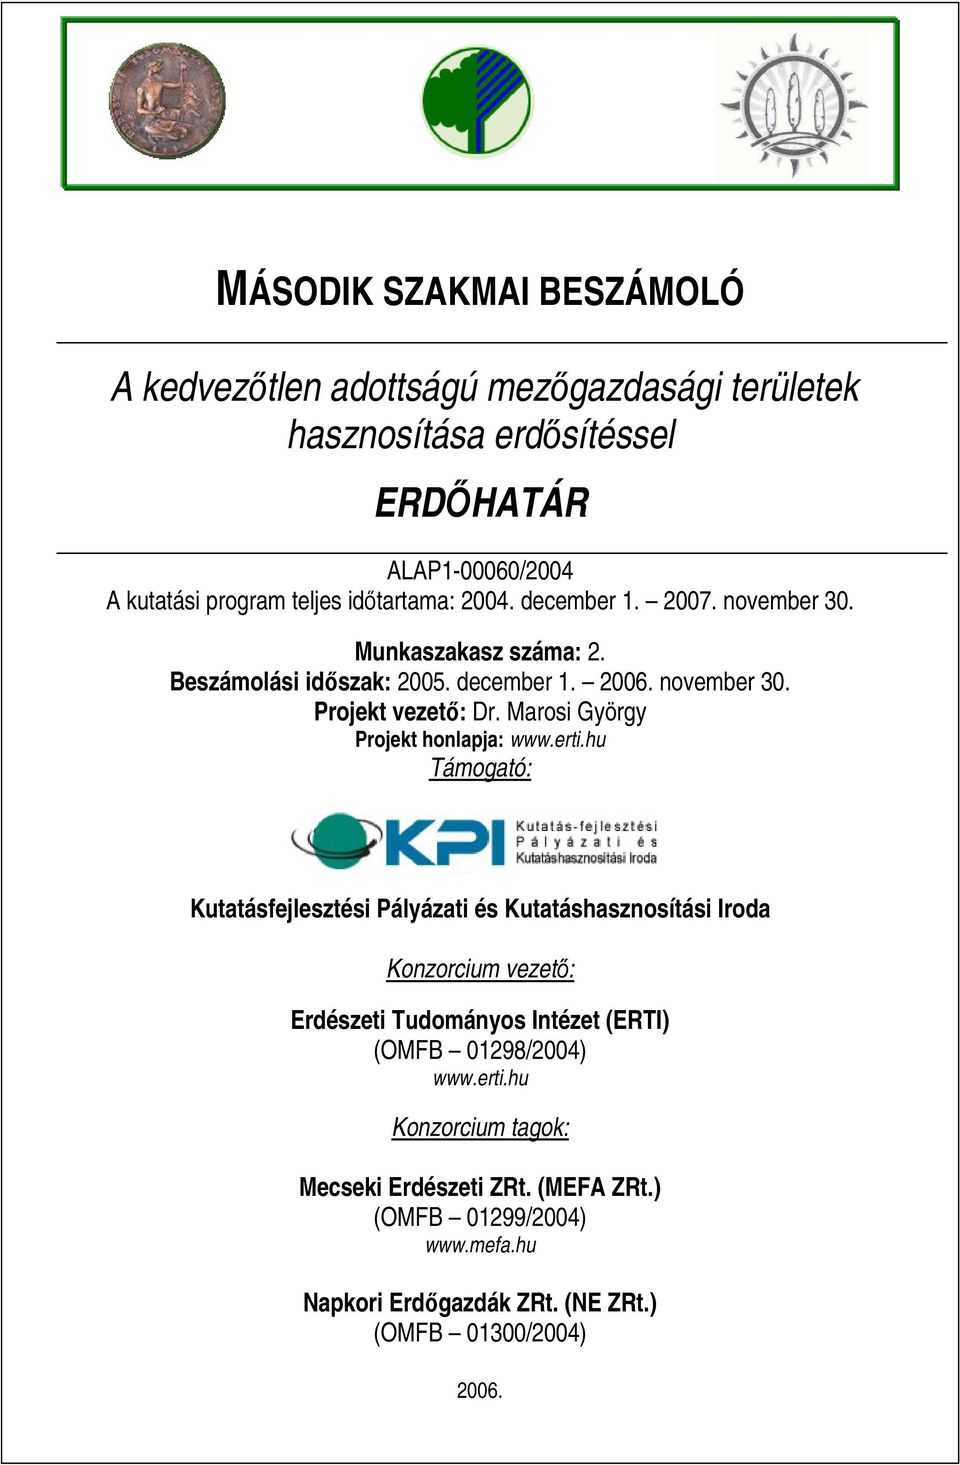 Marosi György Projekt honlapja: www.erti.